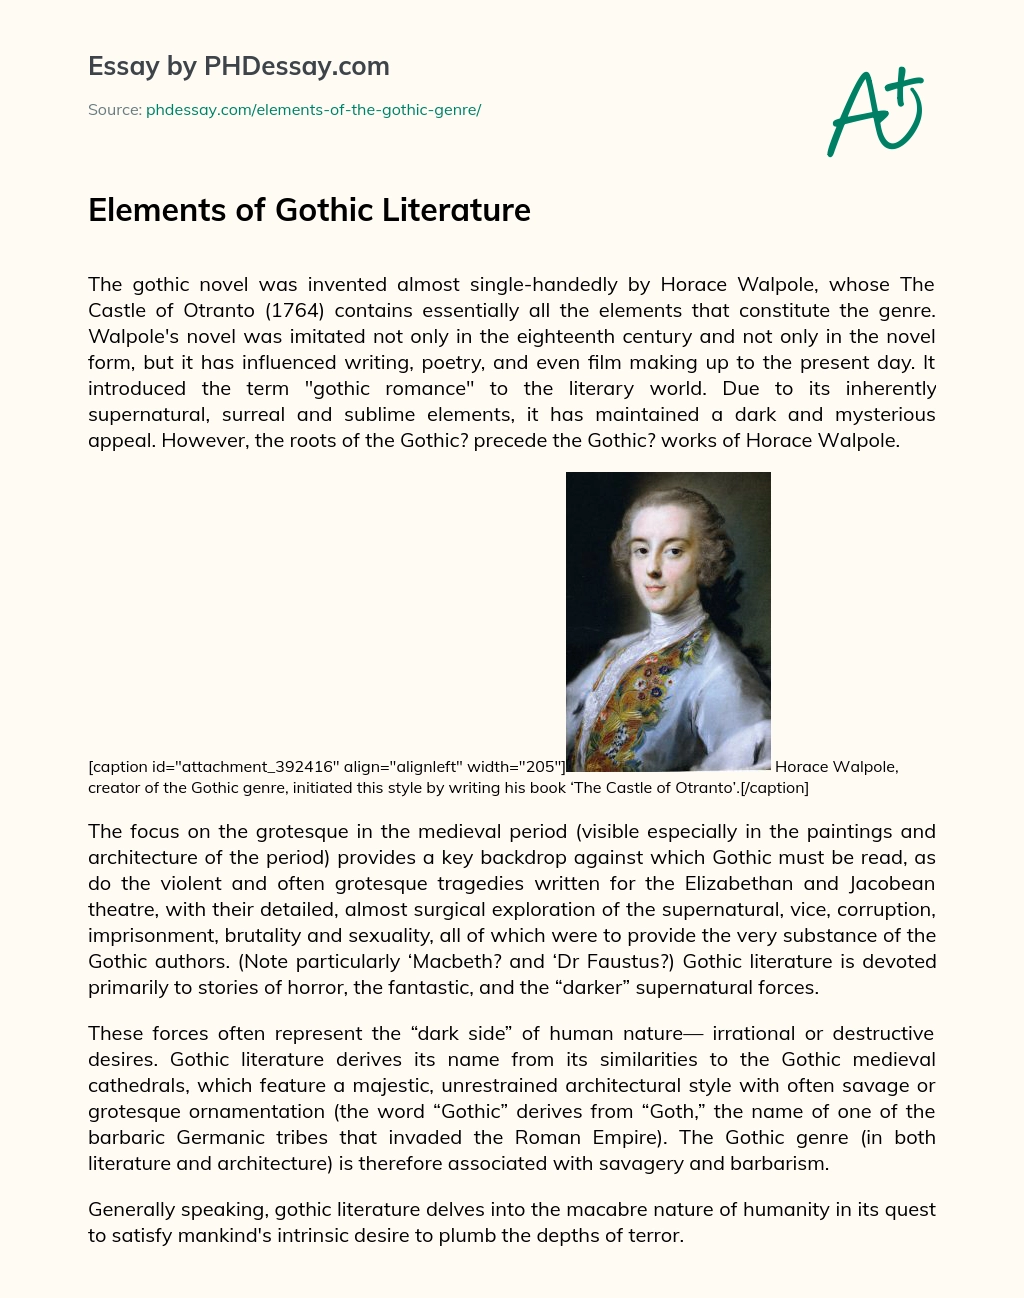 Elements of Gothic Literature essay